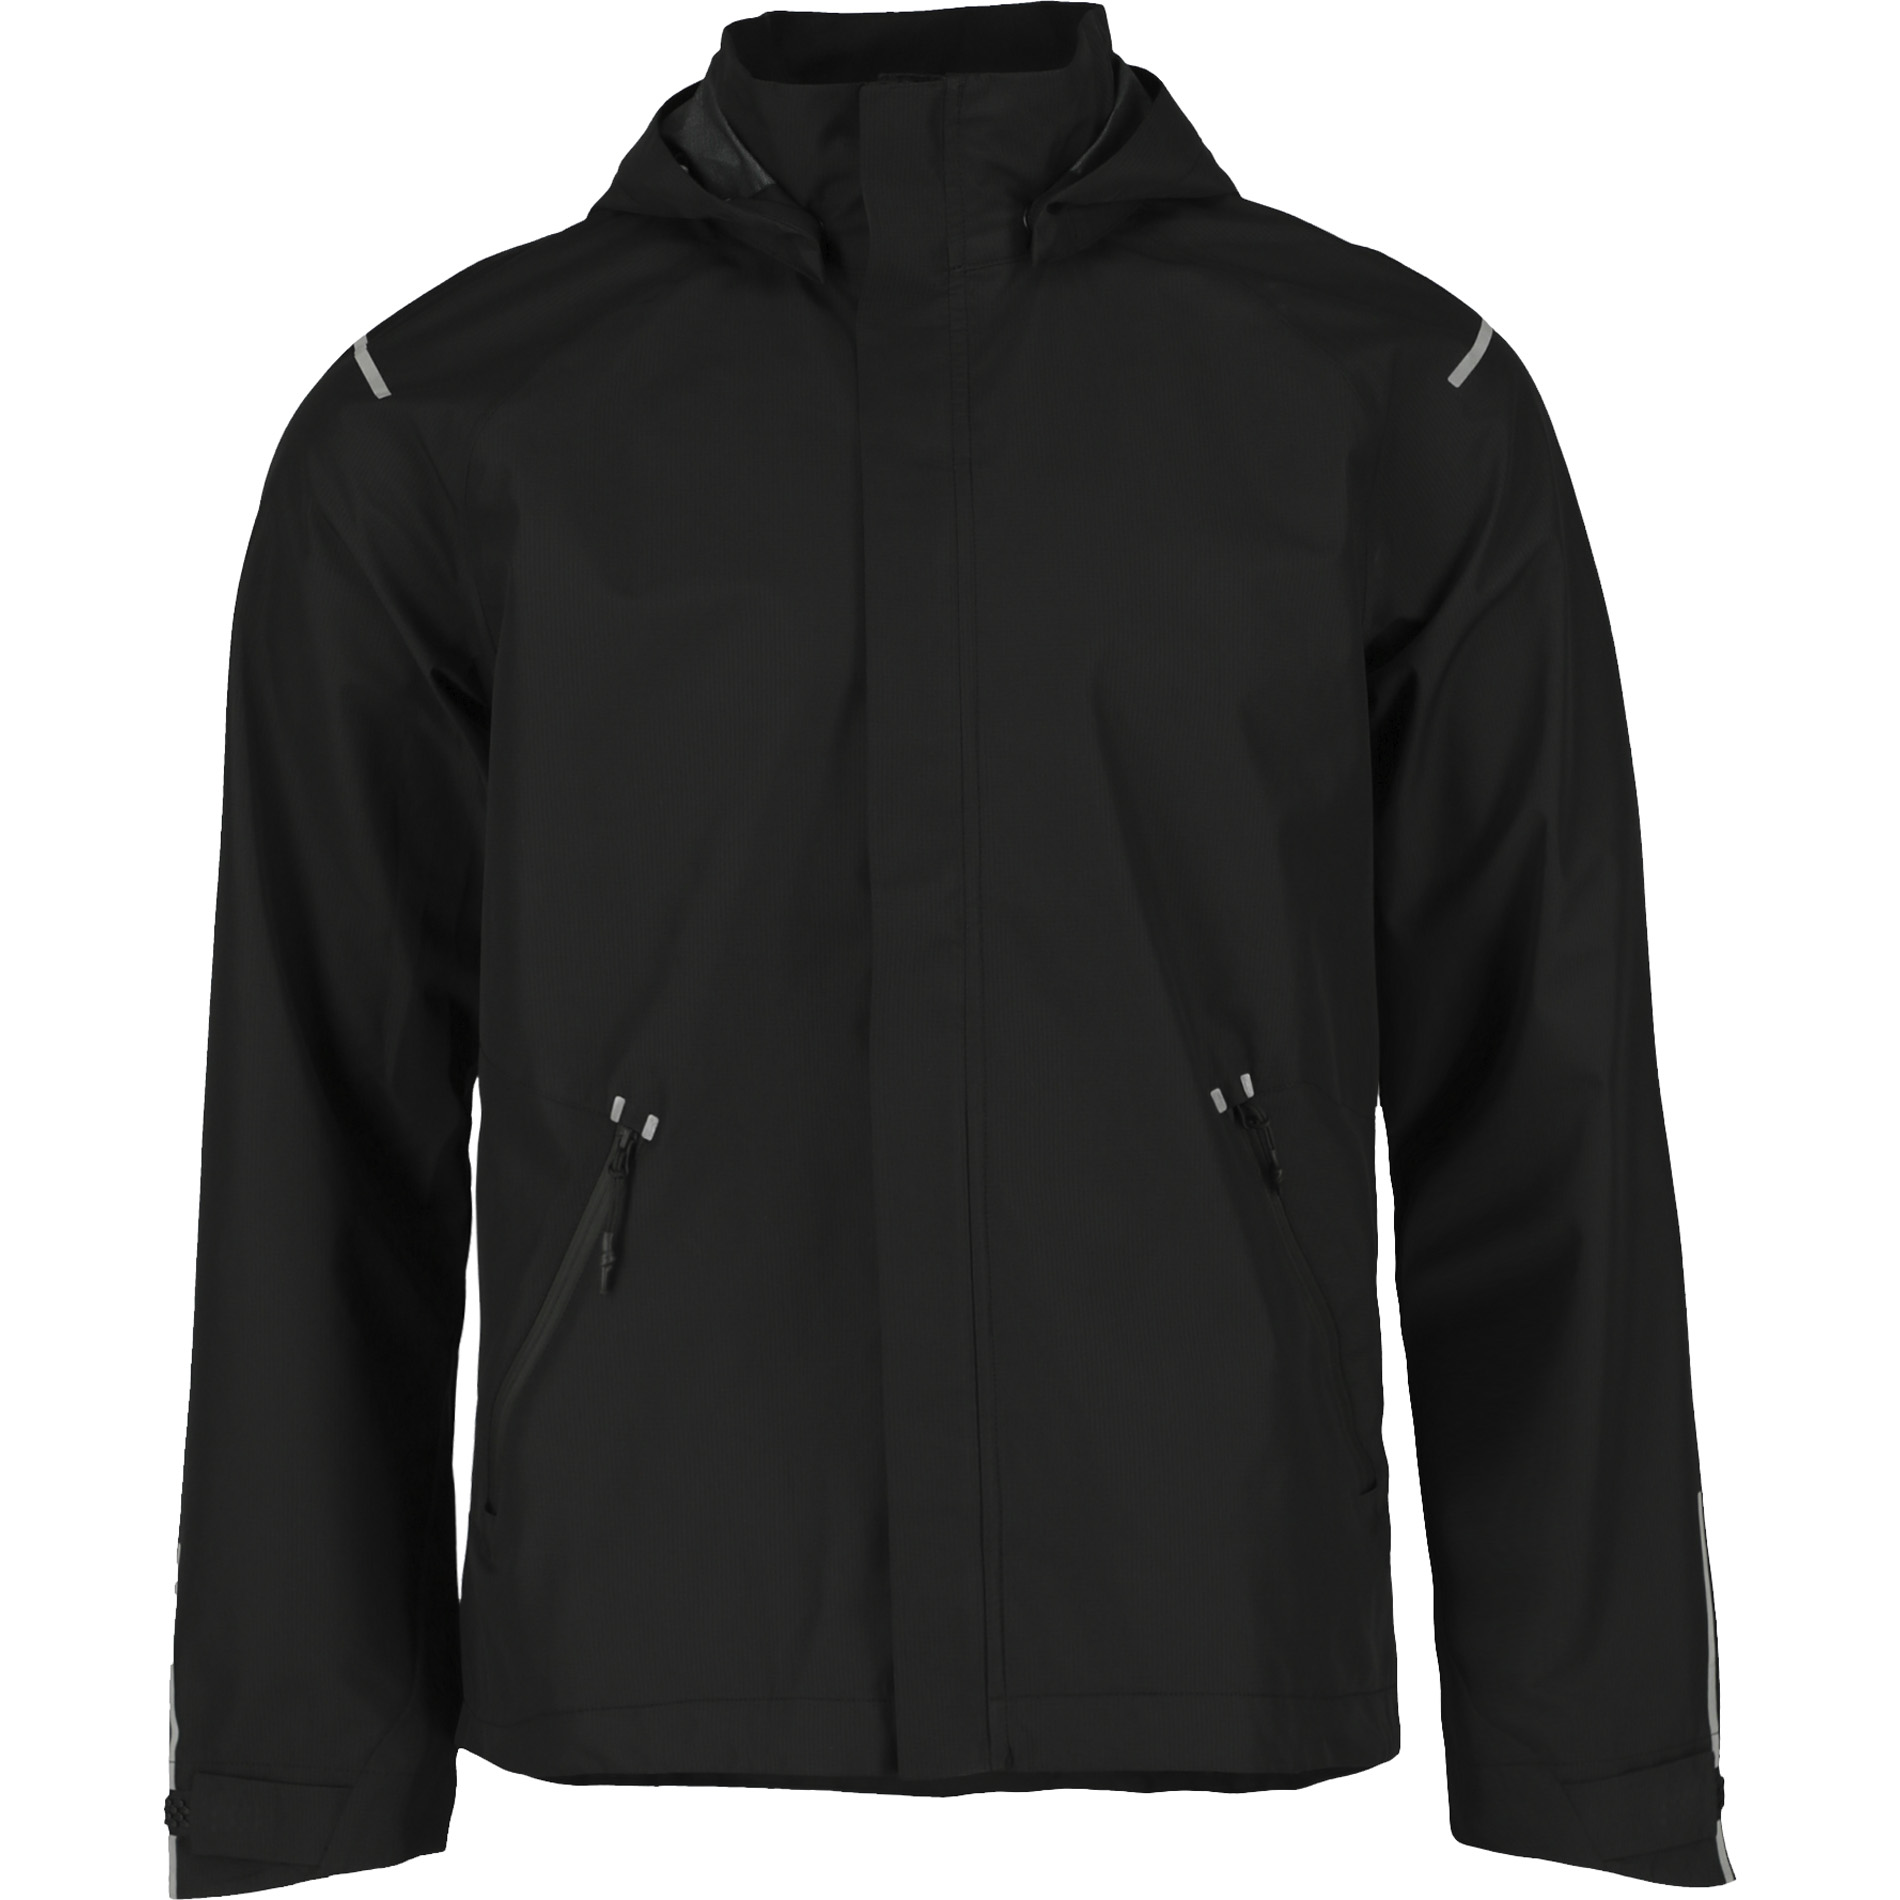 Trimark TM12938 - Men's GEARHART Softshell Jacket $68.09 - Outerwear